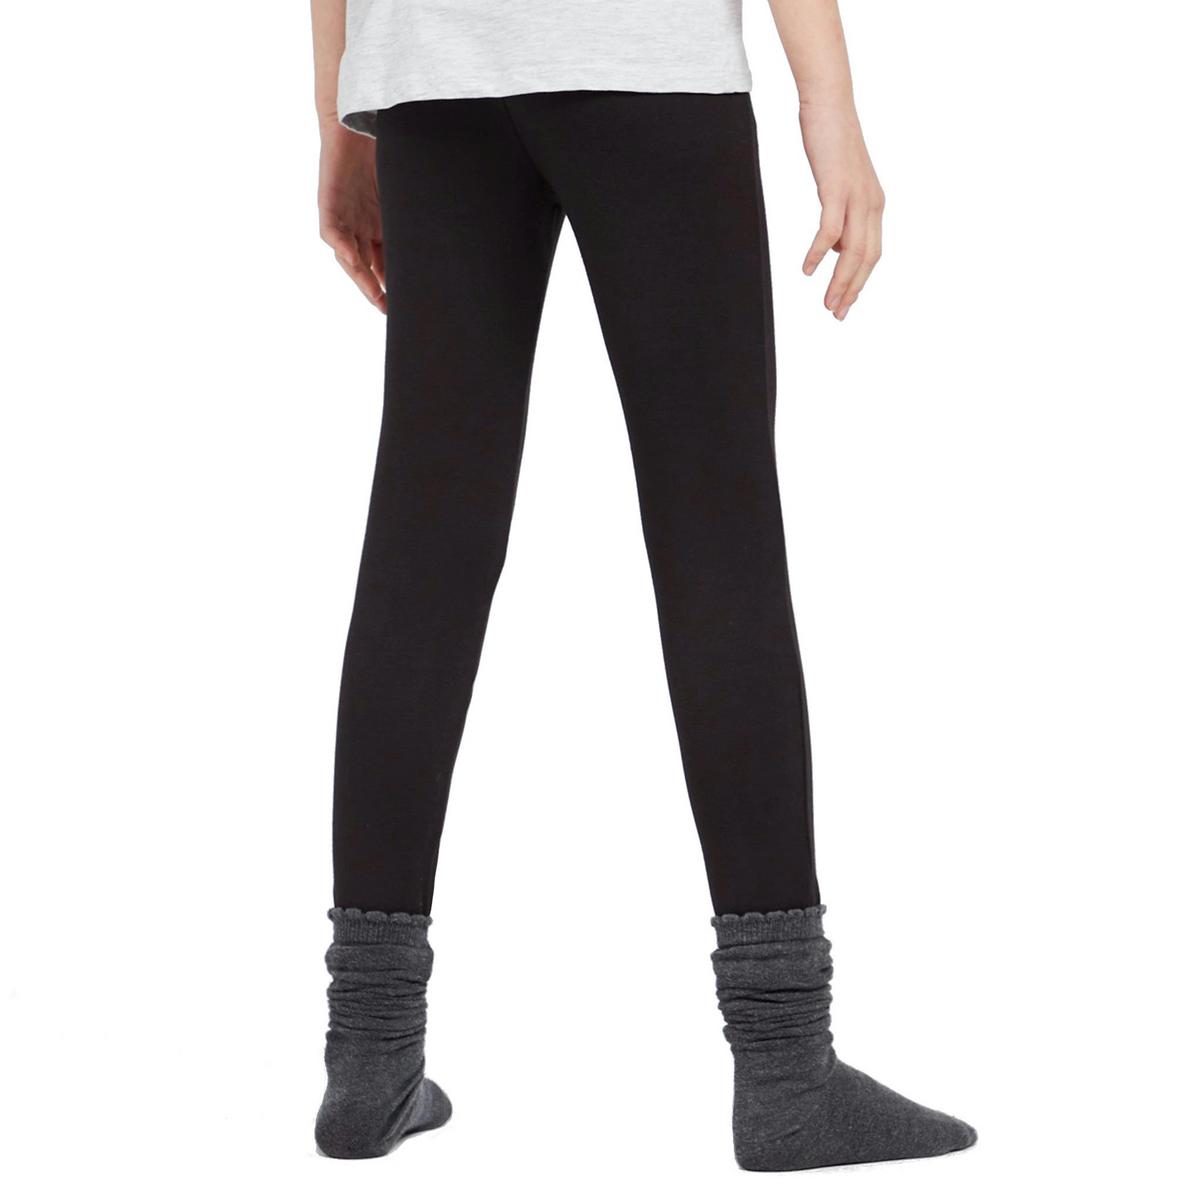 Peter Storm Kids' Thermal Base Layer Pants - Black